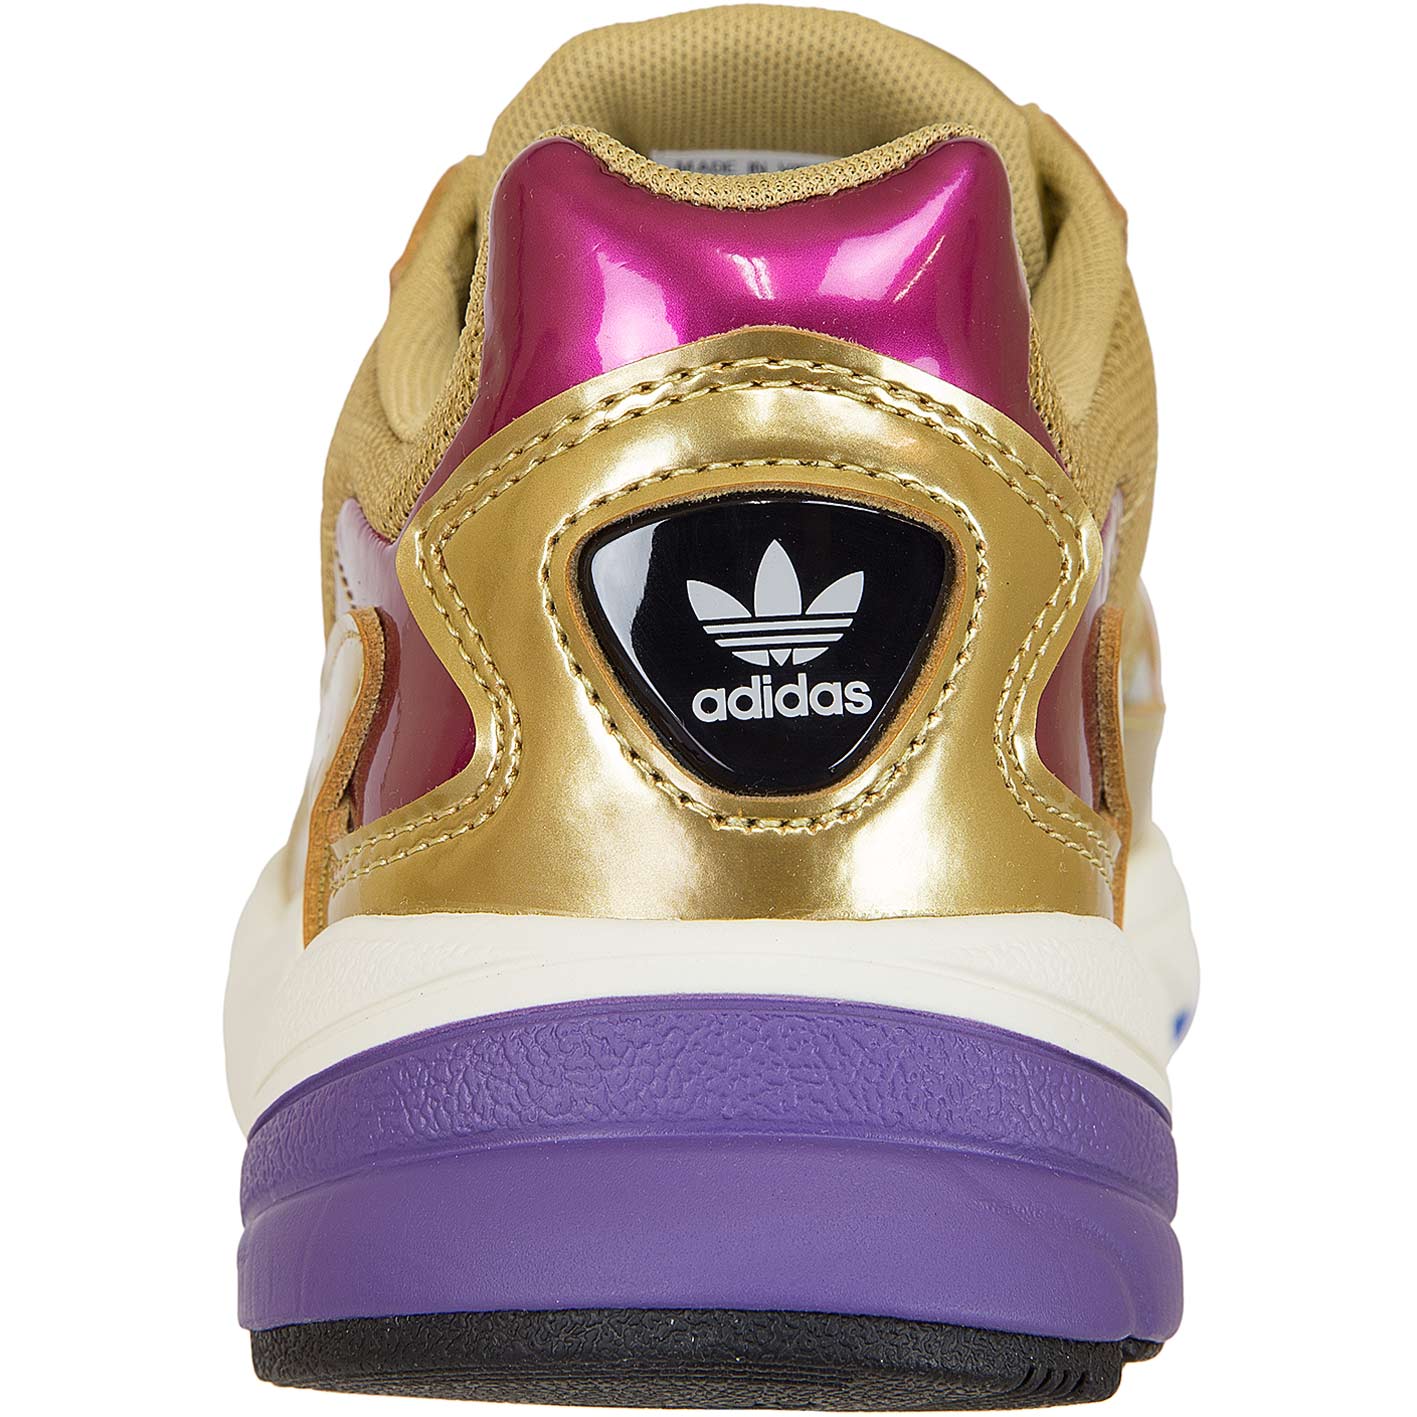 ☆ Adidas Originals Damen Sneaker Falcon gold/weiß - hier bestellen!